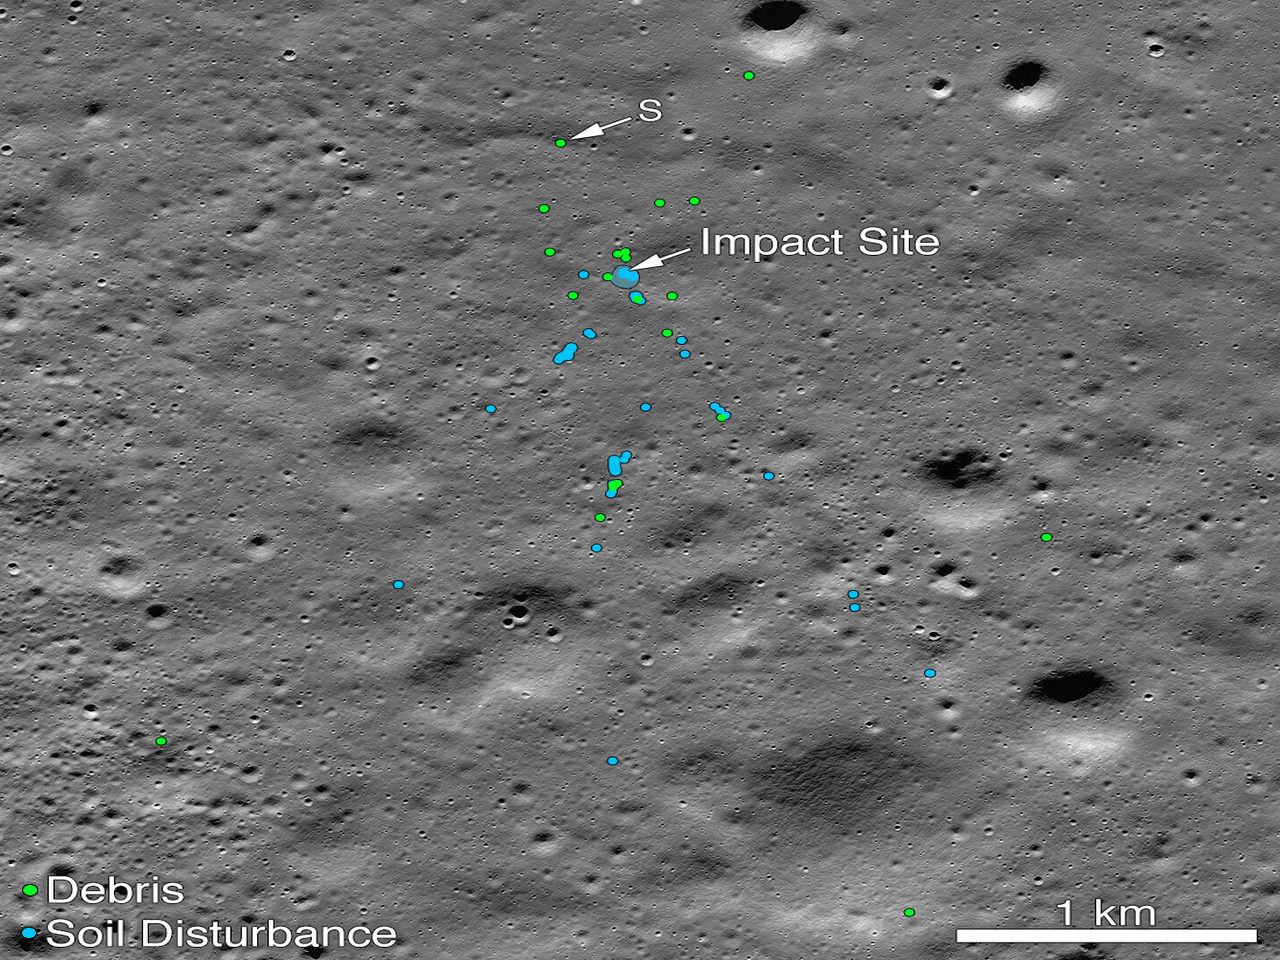 India's Chandrayaan-2 Vikram moon lander 